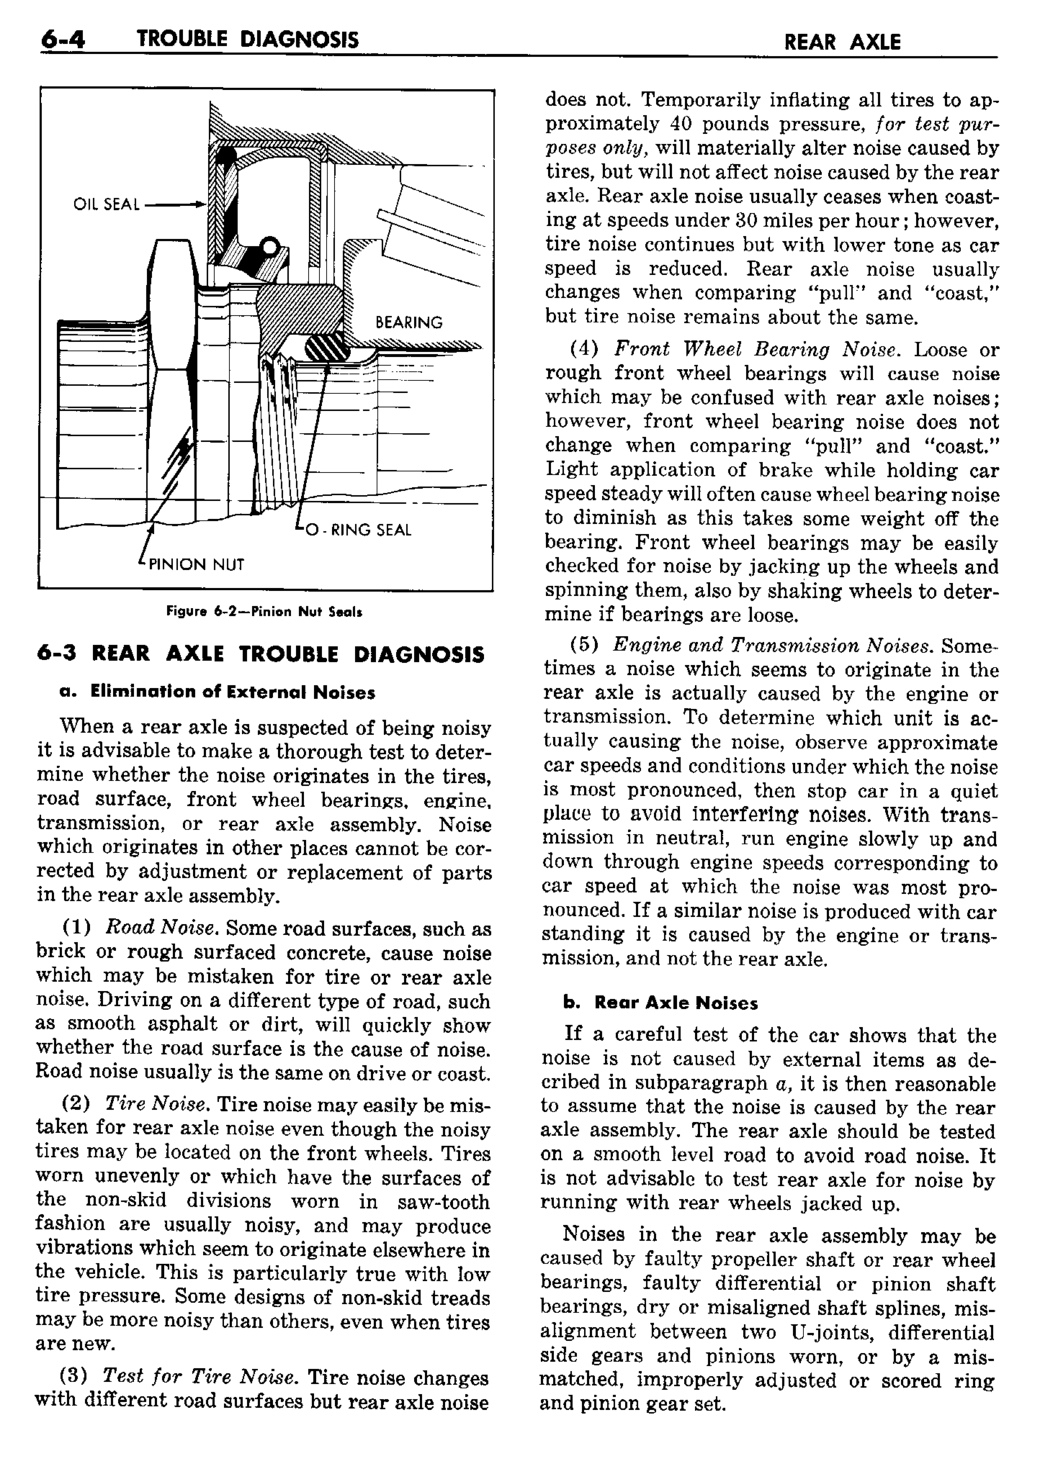 n_07 1960 Buick Shop Manual - Rear Axle-004-004.jpg